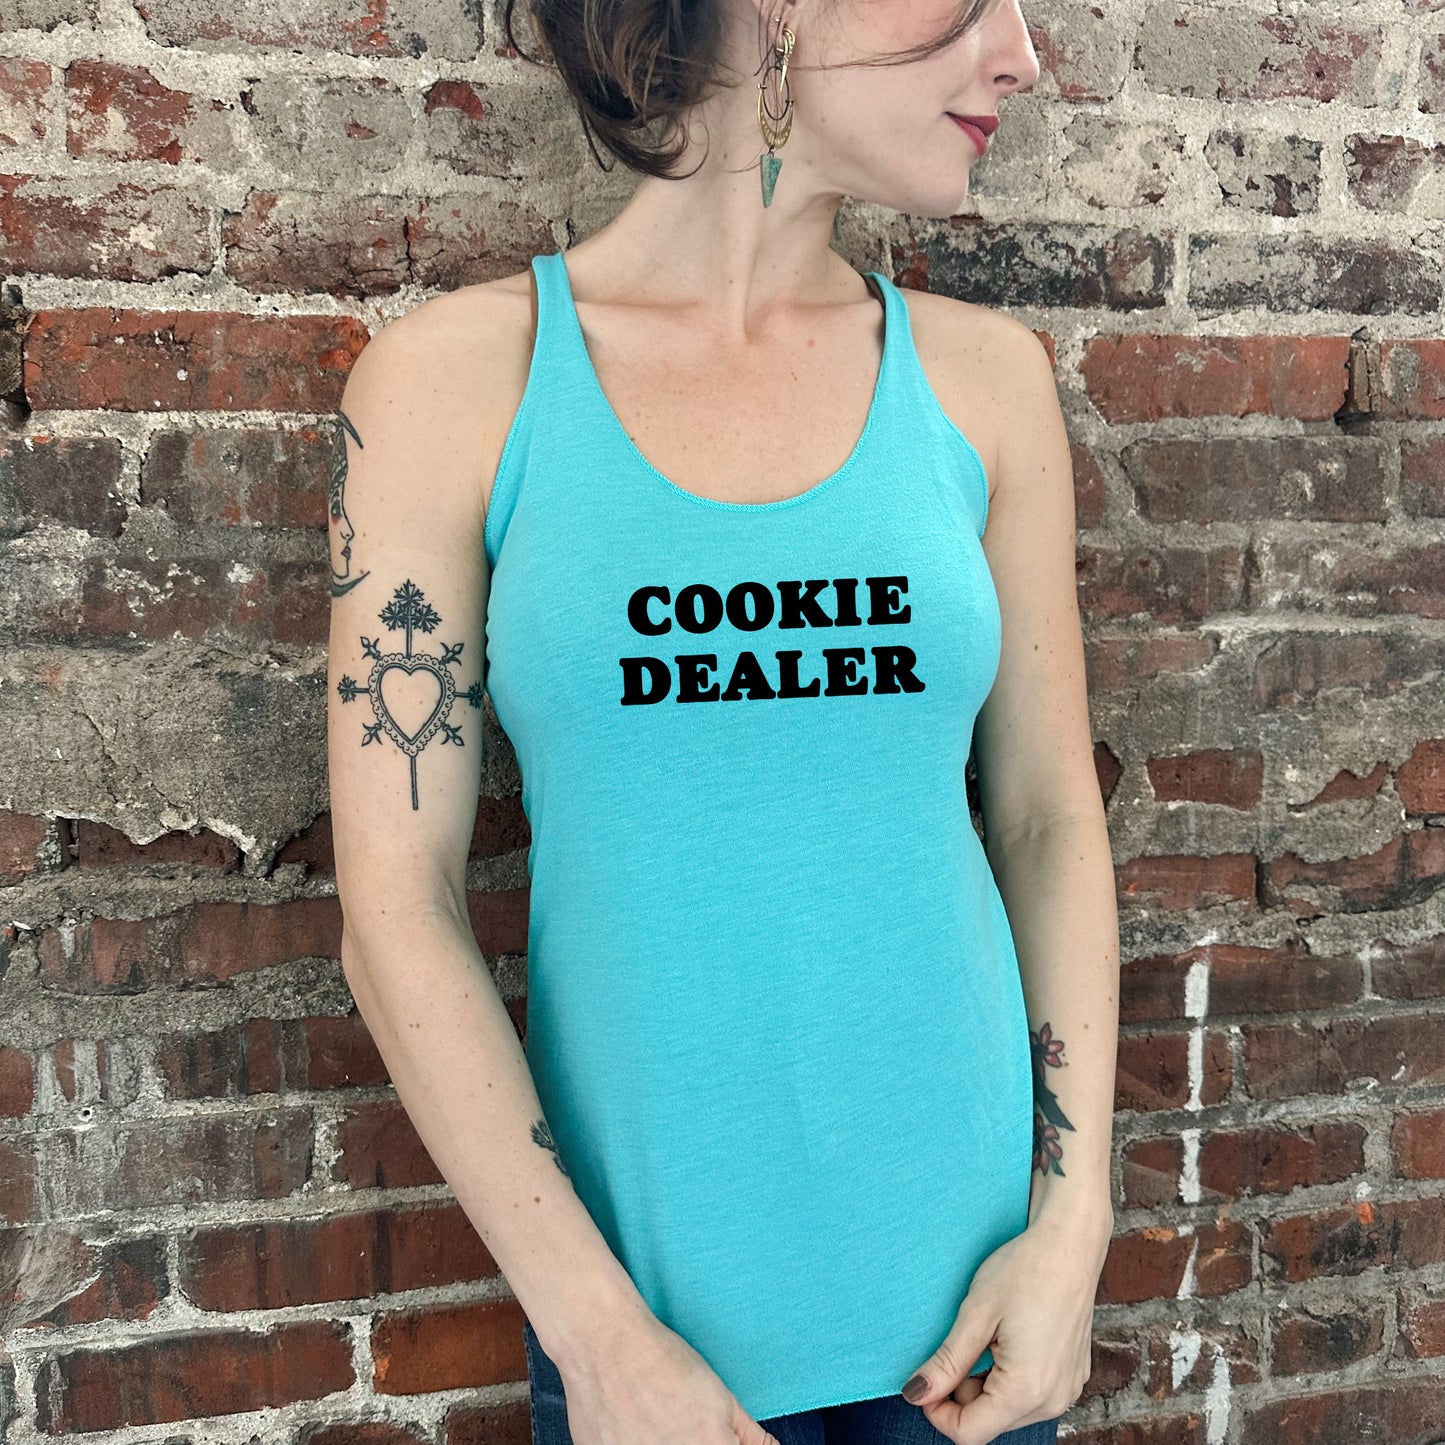 Cookie Dealer (Baking) - Women's Tank - Heather Gray, Tahiti, or Envy